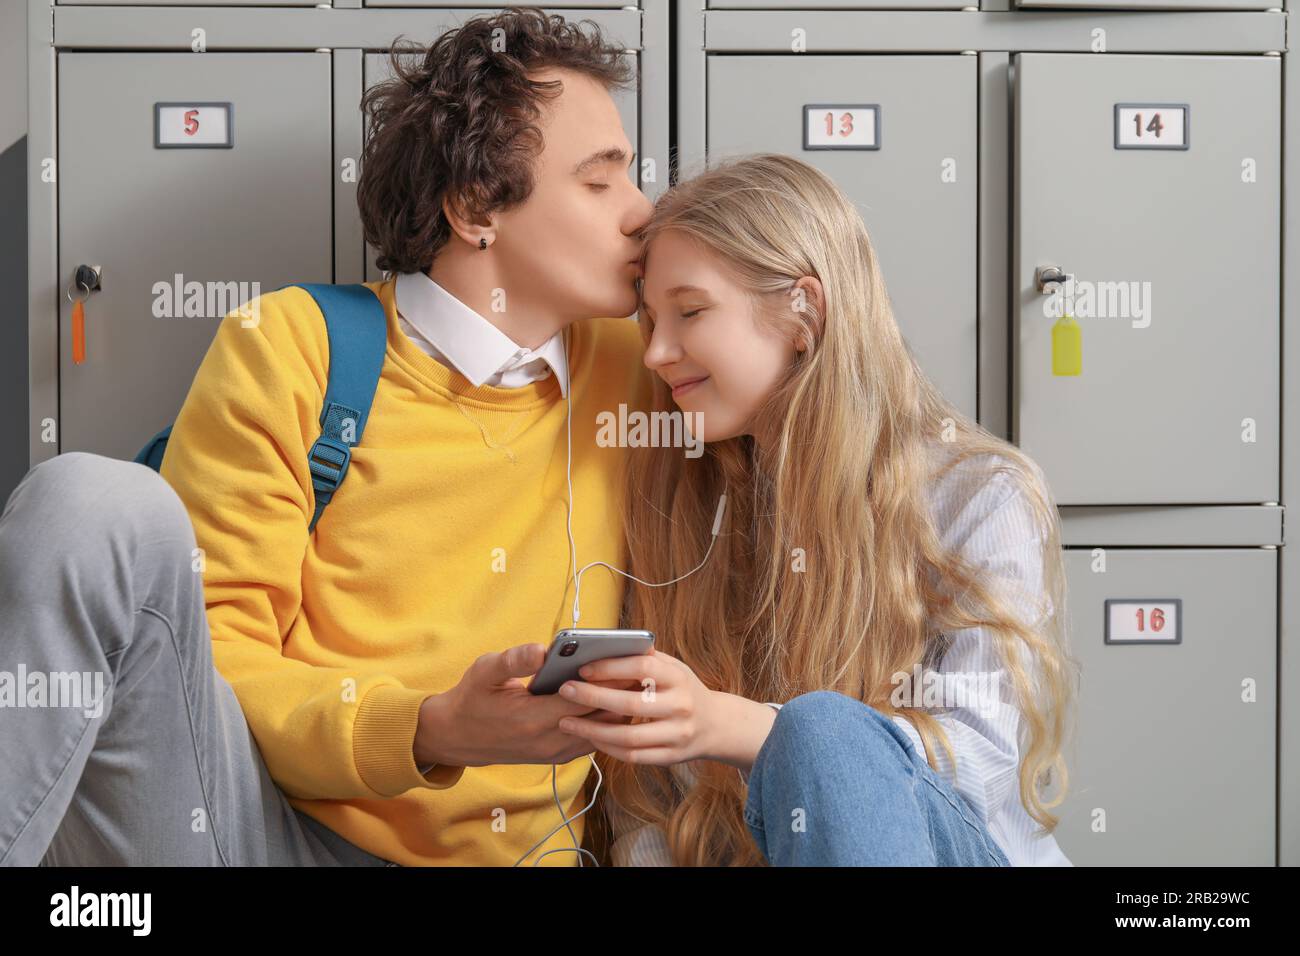 Cute teenage couple with earphones listening to music near locker at school Stock Photo